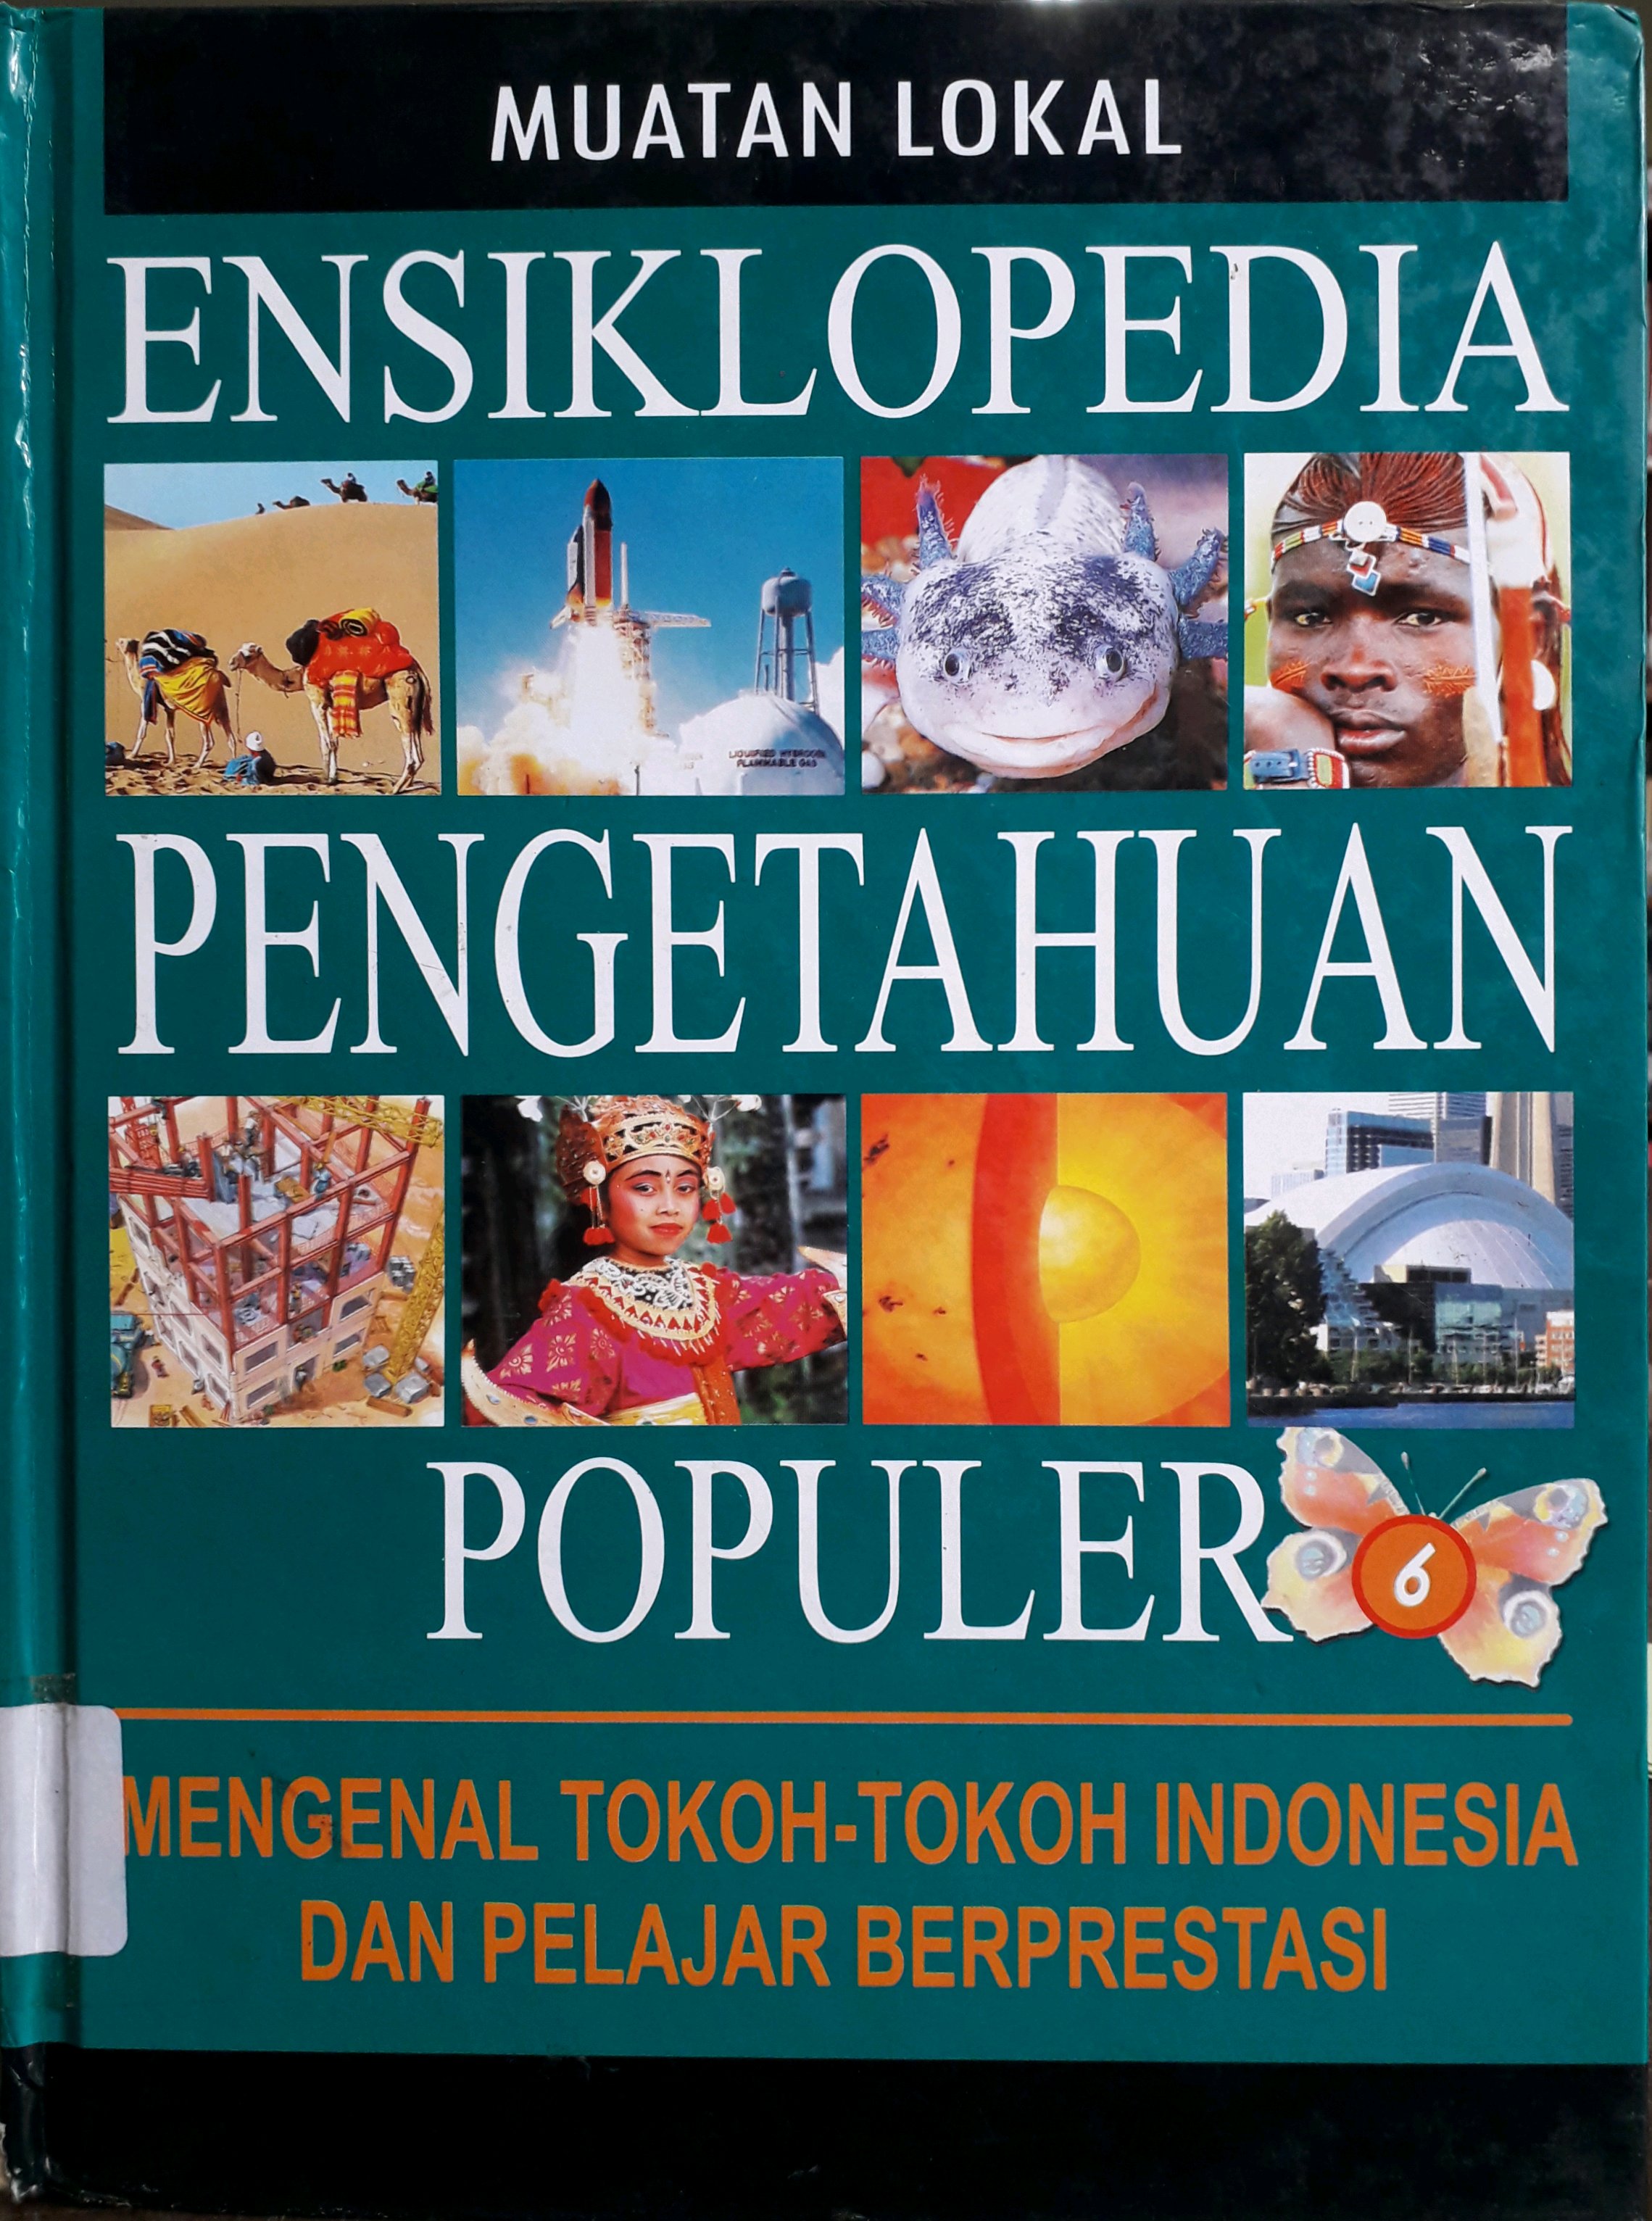 Muatan Lokal Ensiklopedia Pengetahuan Populer 6 :  Mengenal Tokoh-Tokoh Indonesia dan Pelajar Berprestasi